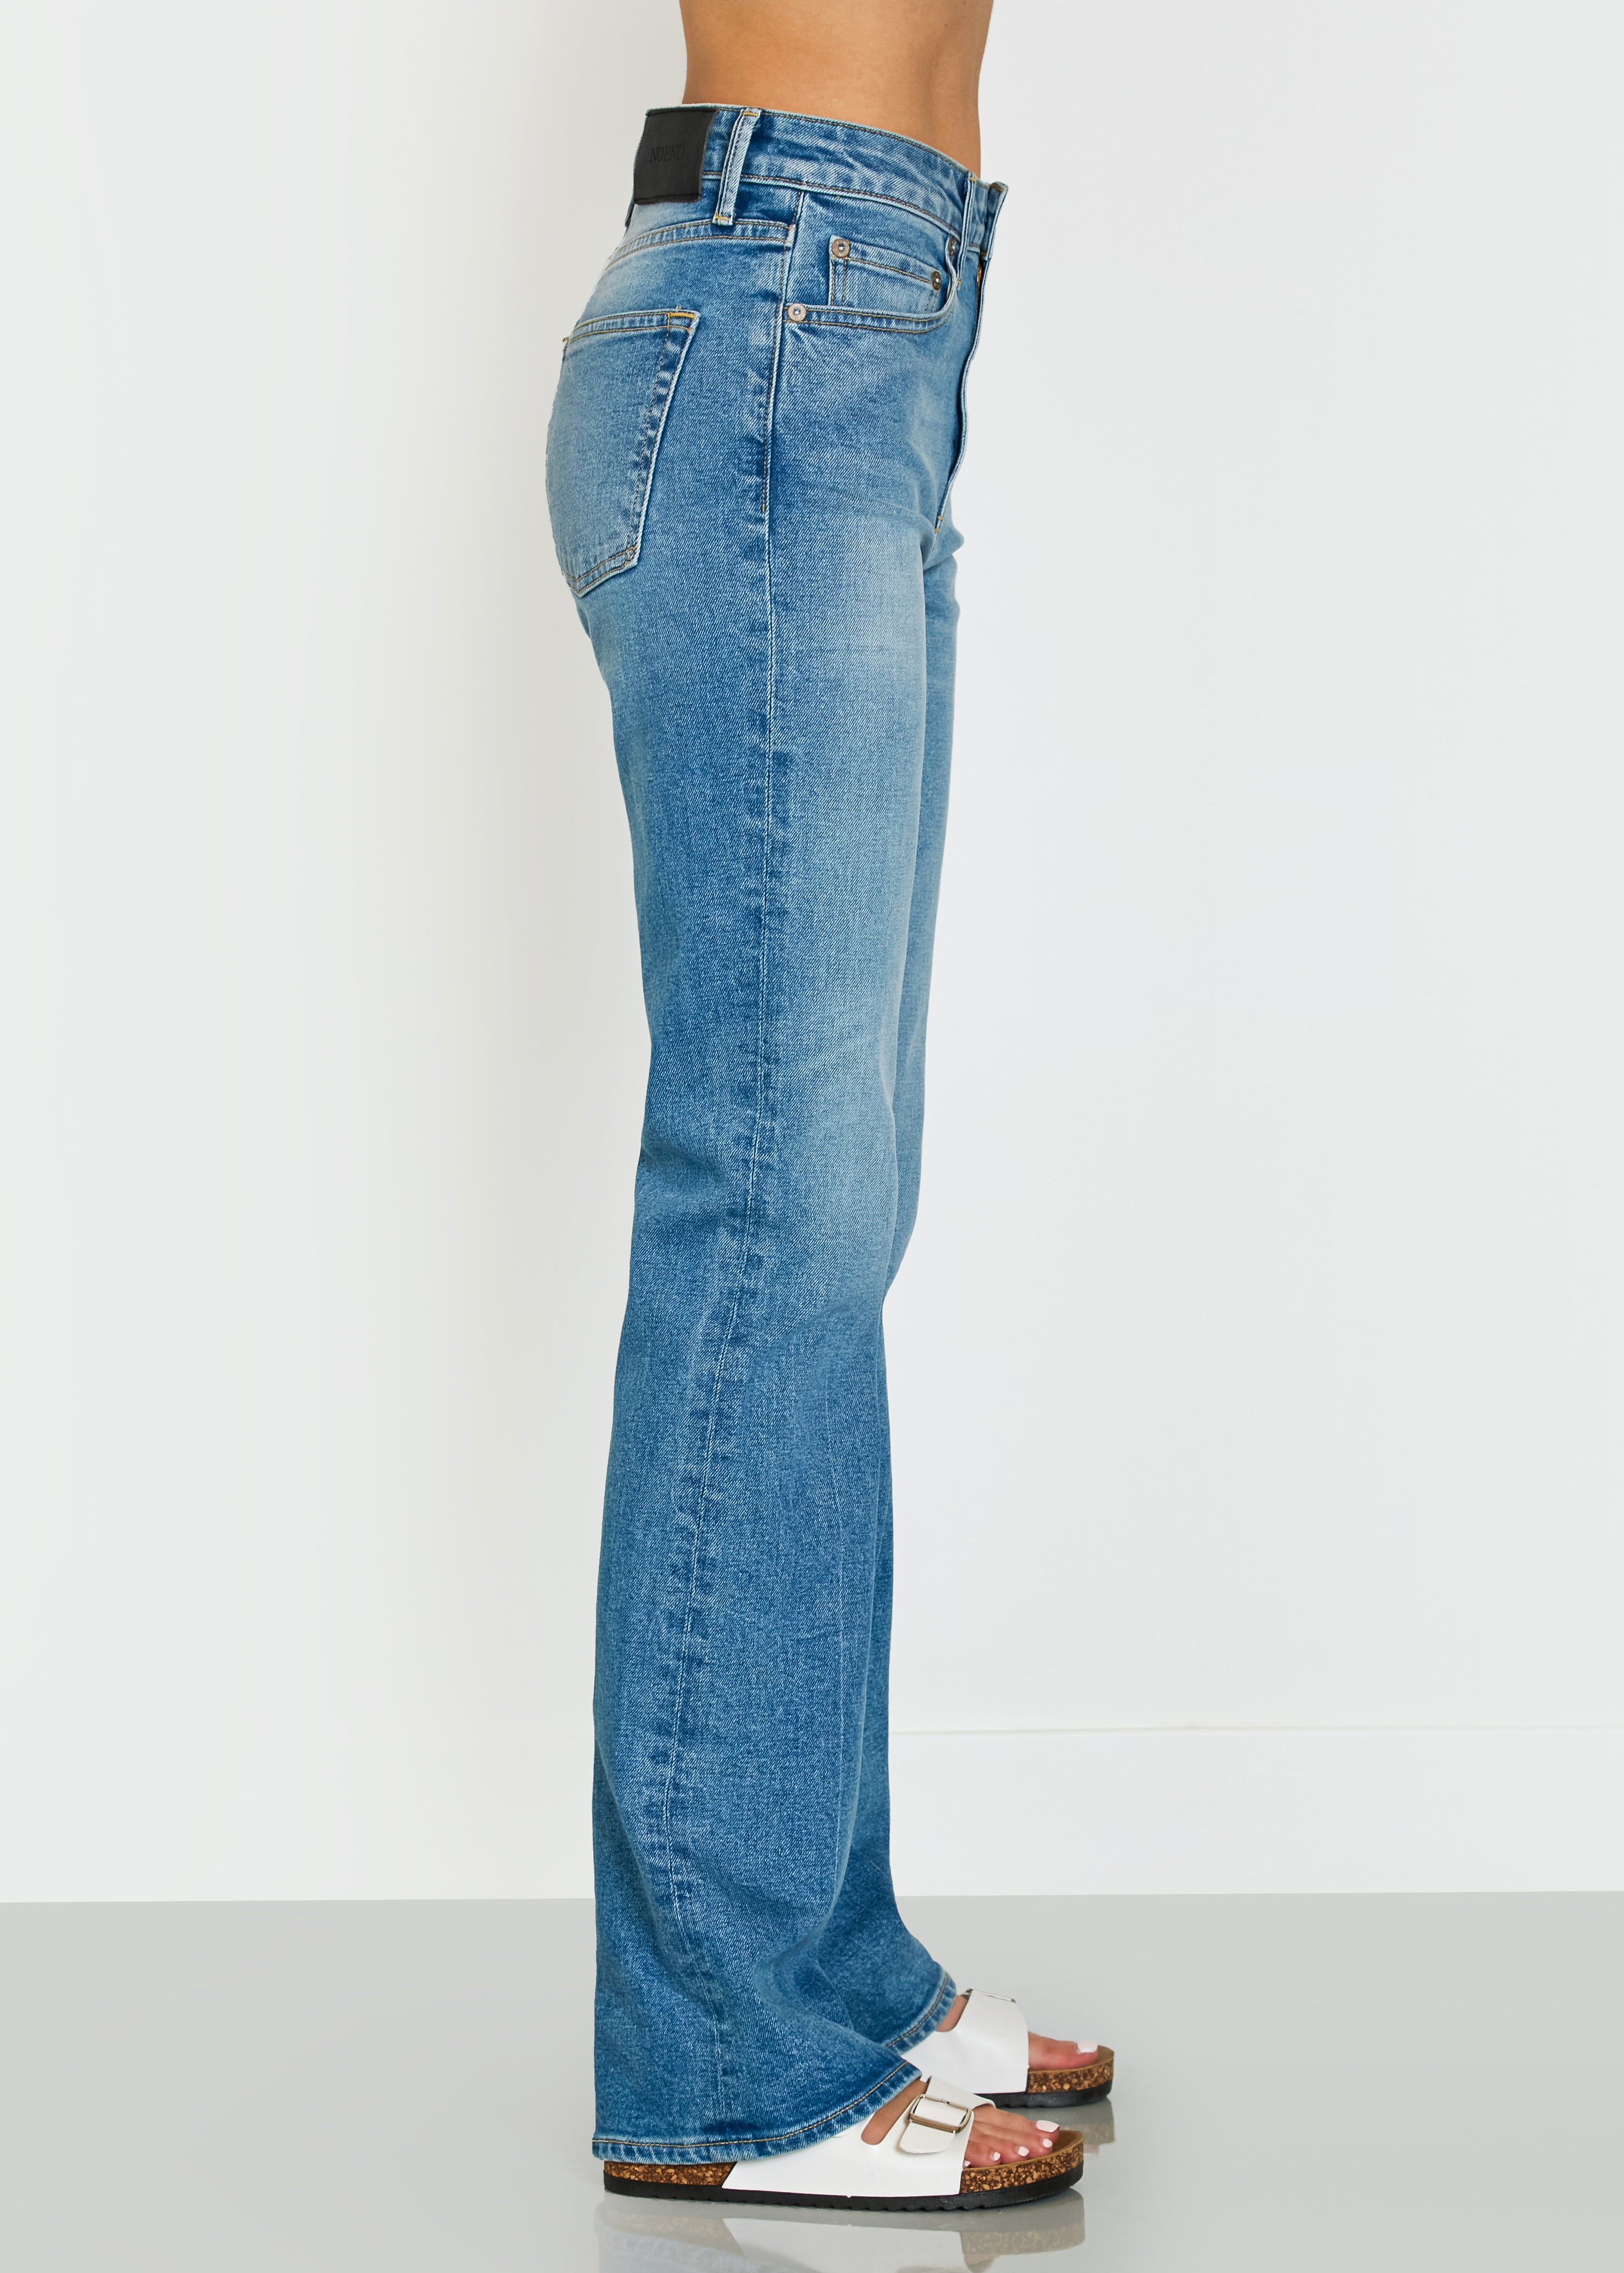 LINUMIN Women's Lace-up Bell Bottom Denim Pants Mid Waist Stretchy Flare Juniors  Jeans Trouser Leggings (Blue, S) at  Women's Jeans store